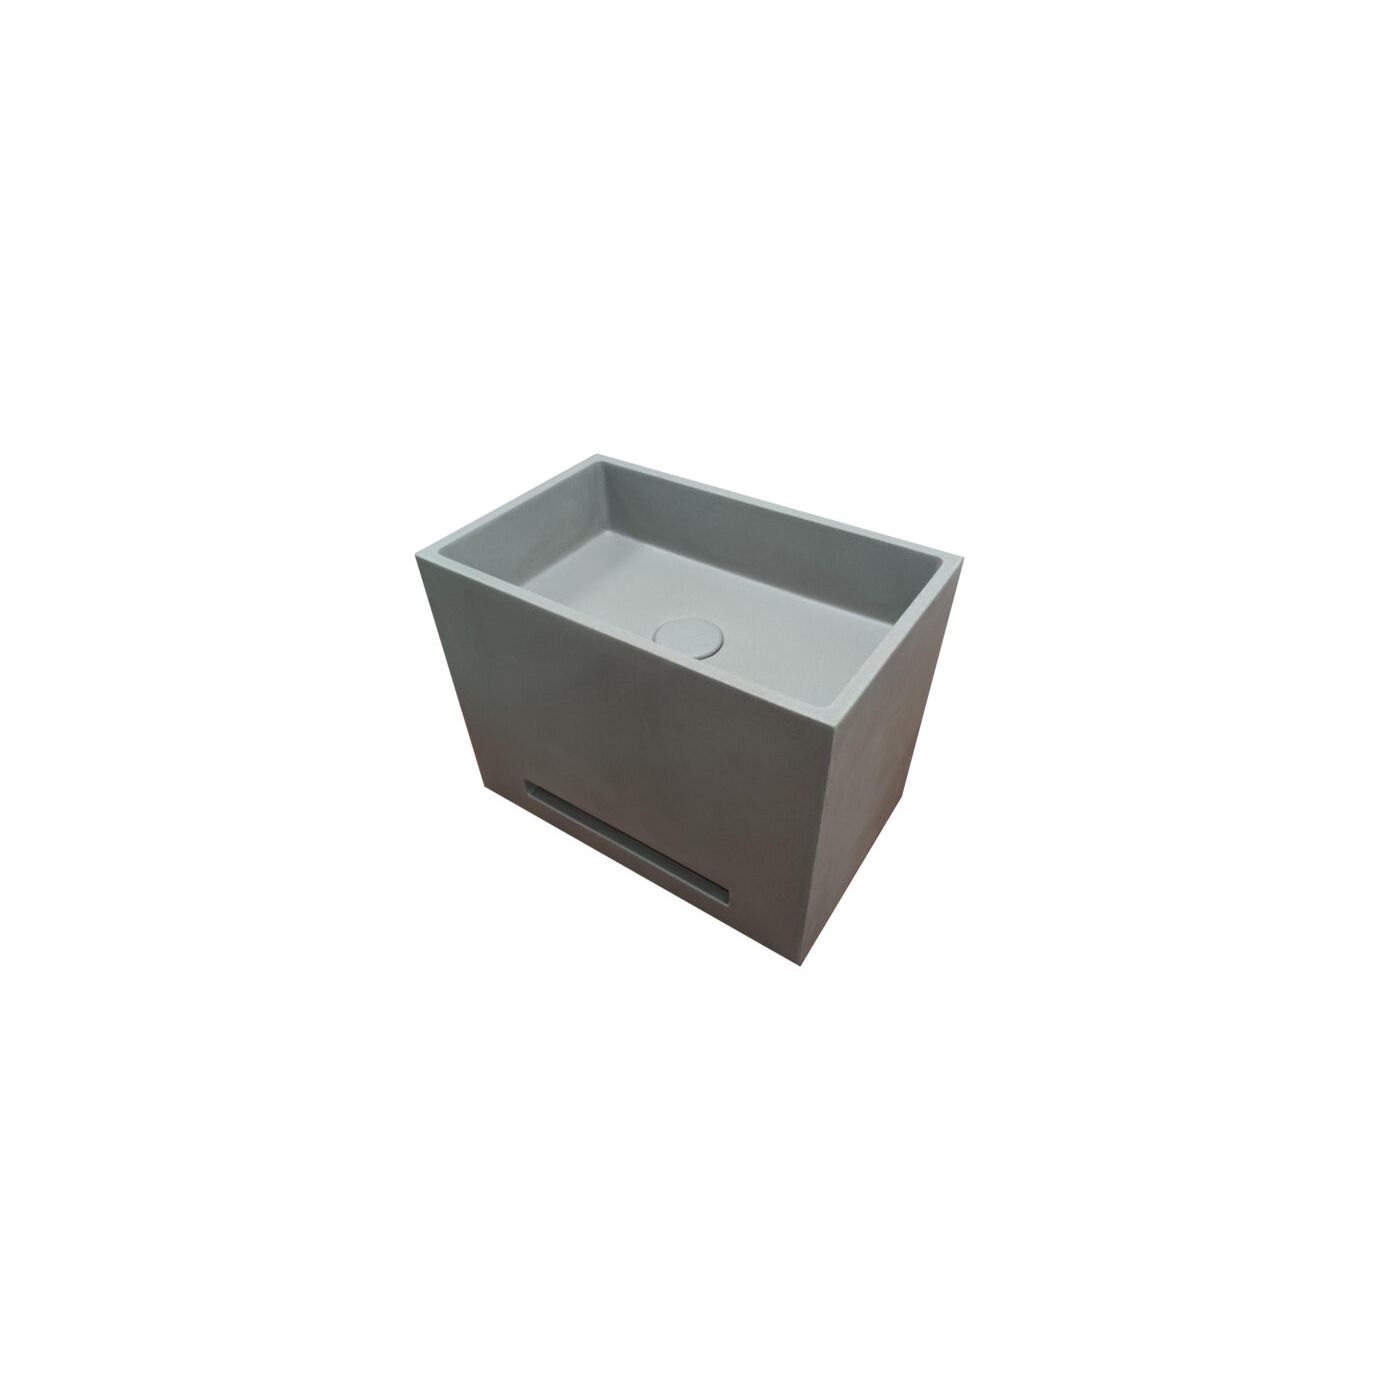 Ideavit Idea.Wall-D5 rechthoekige wastafel met handdoekhouder 25x40 beton grijs